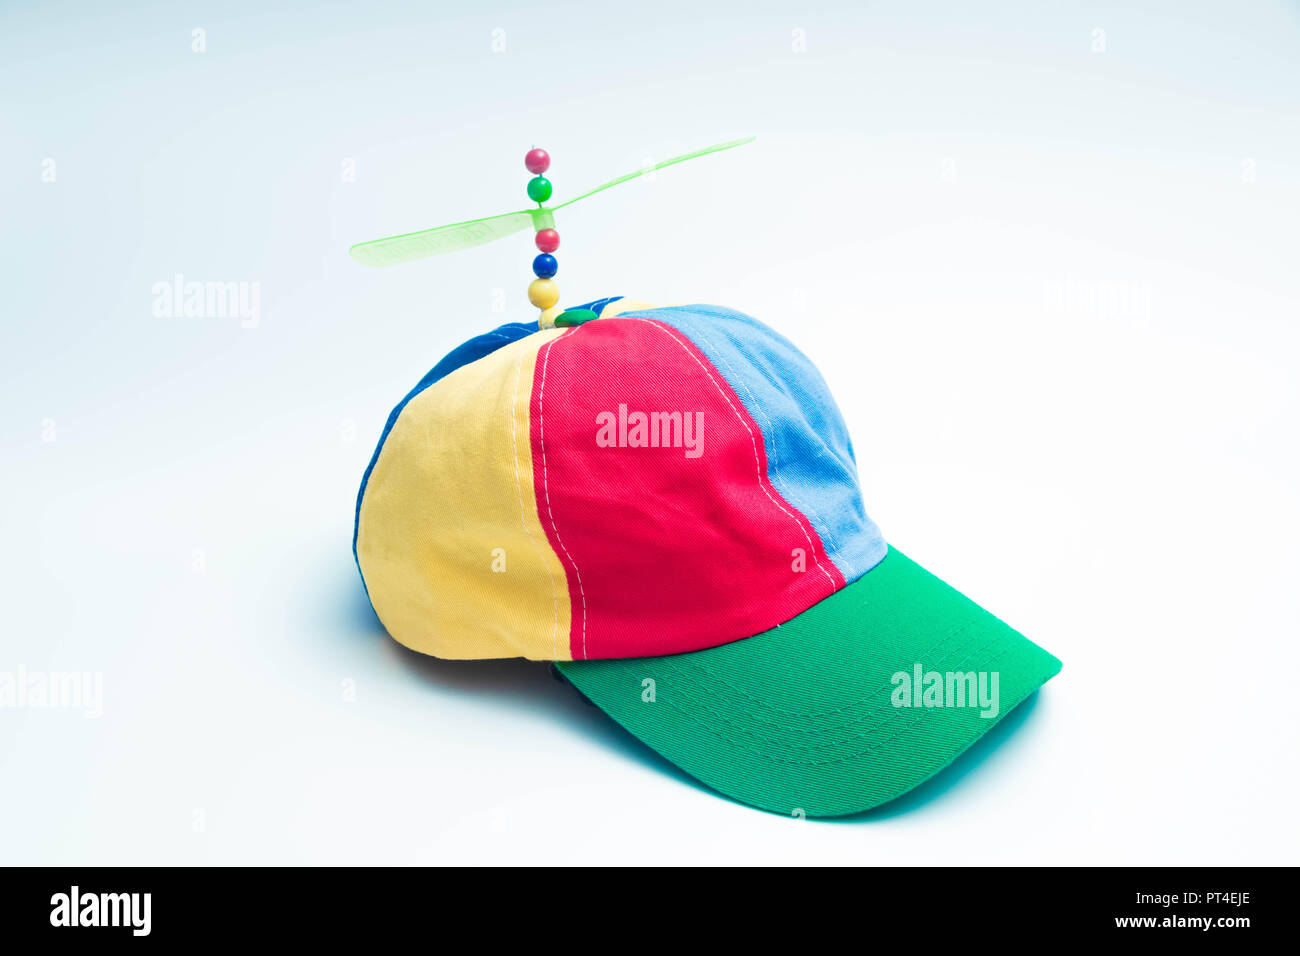 KIDS PROPELLER BASEBALL CAPS childrens funny hats kids dunce funny weird hat  new